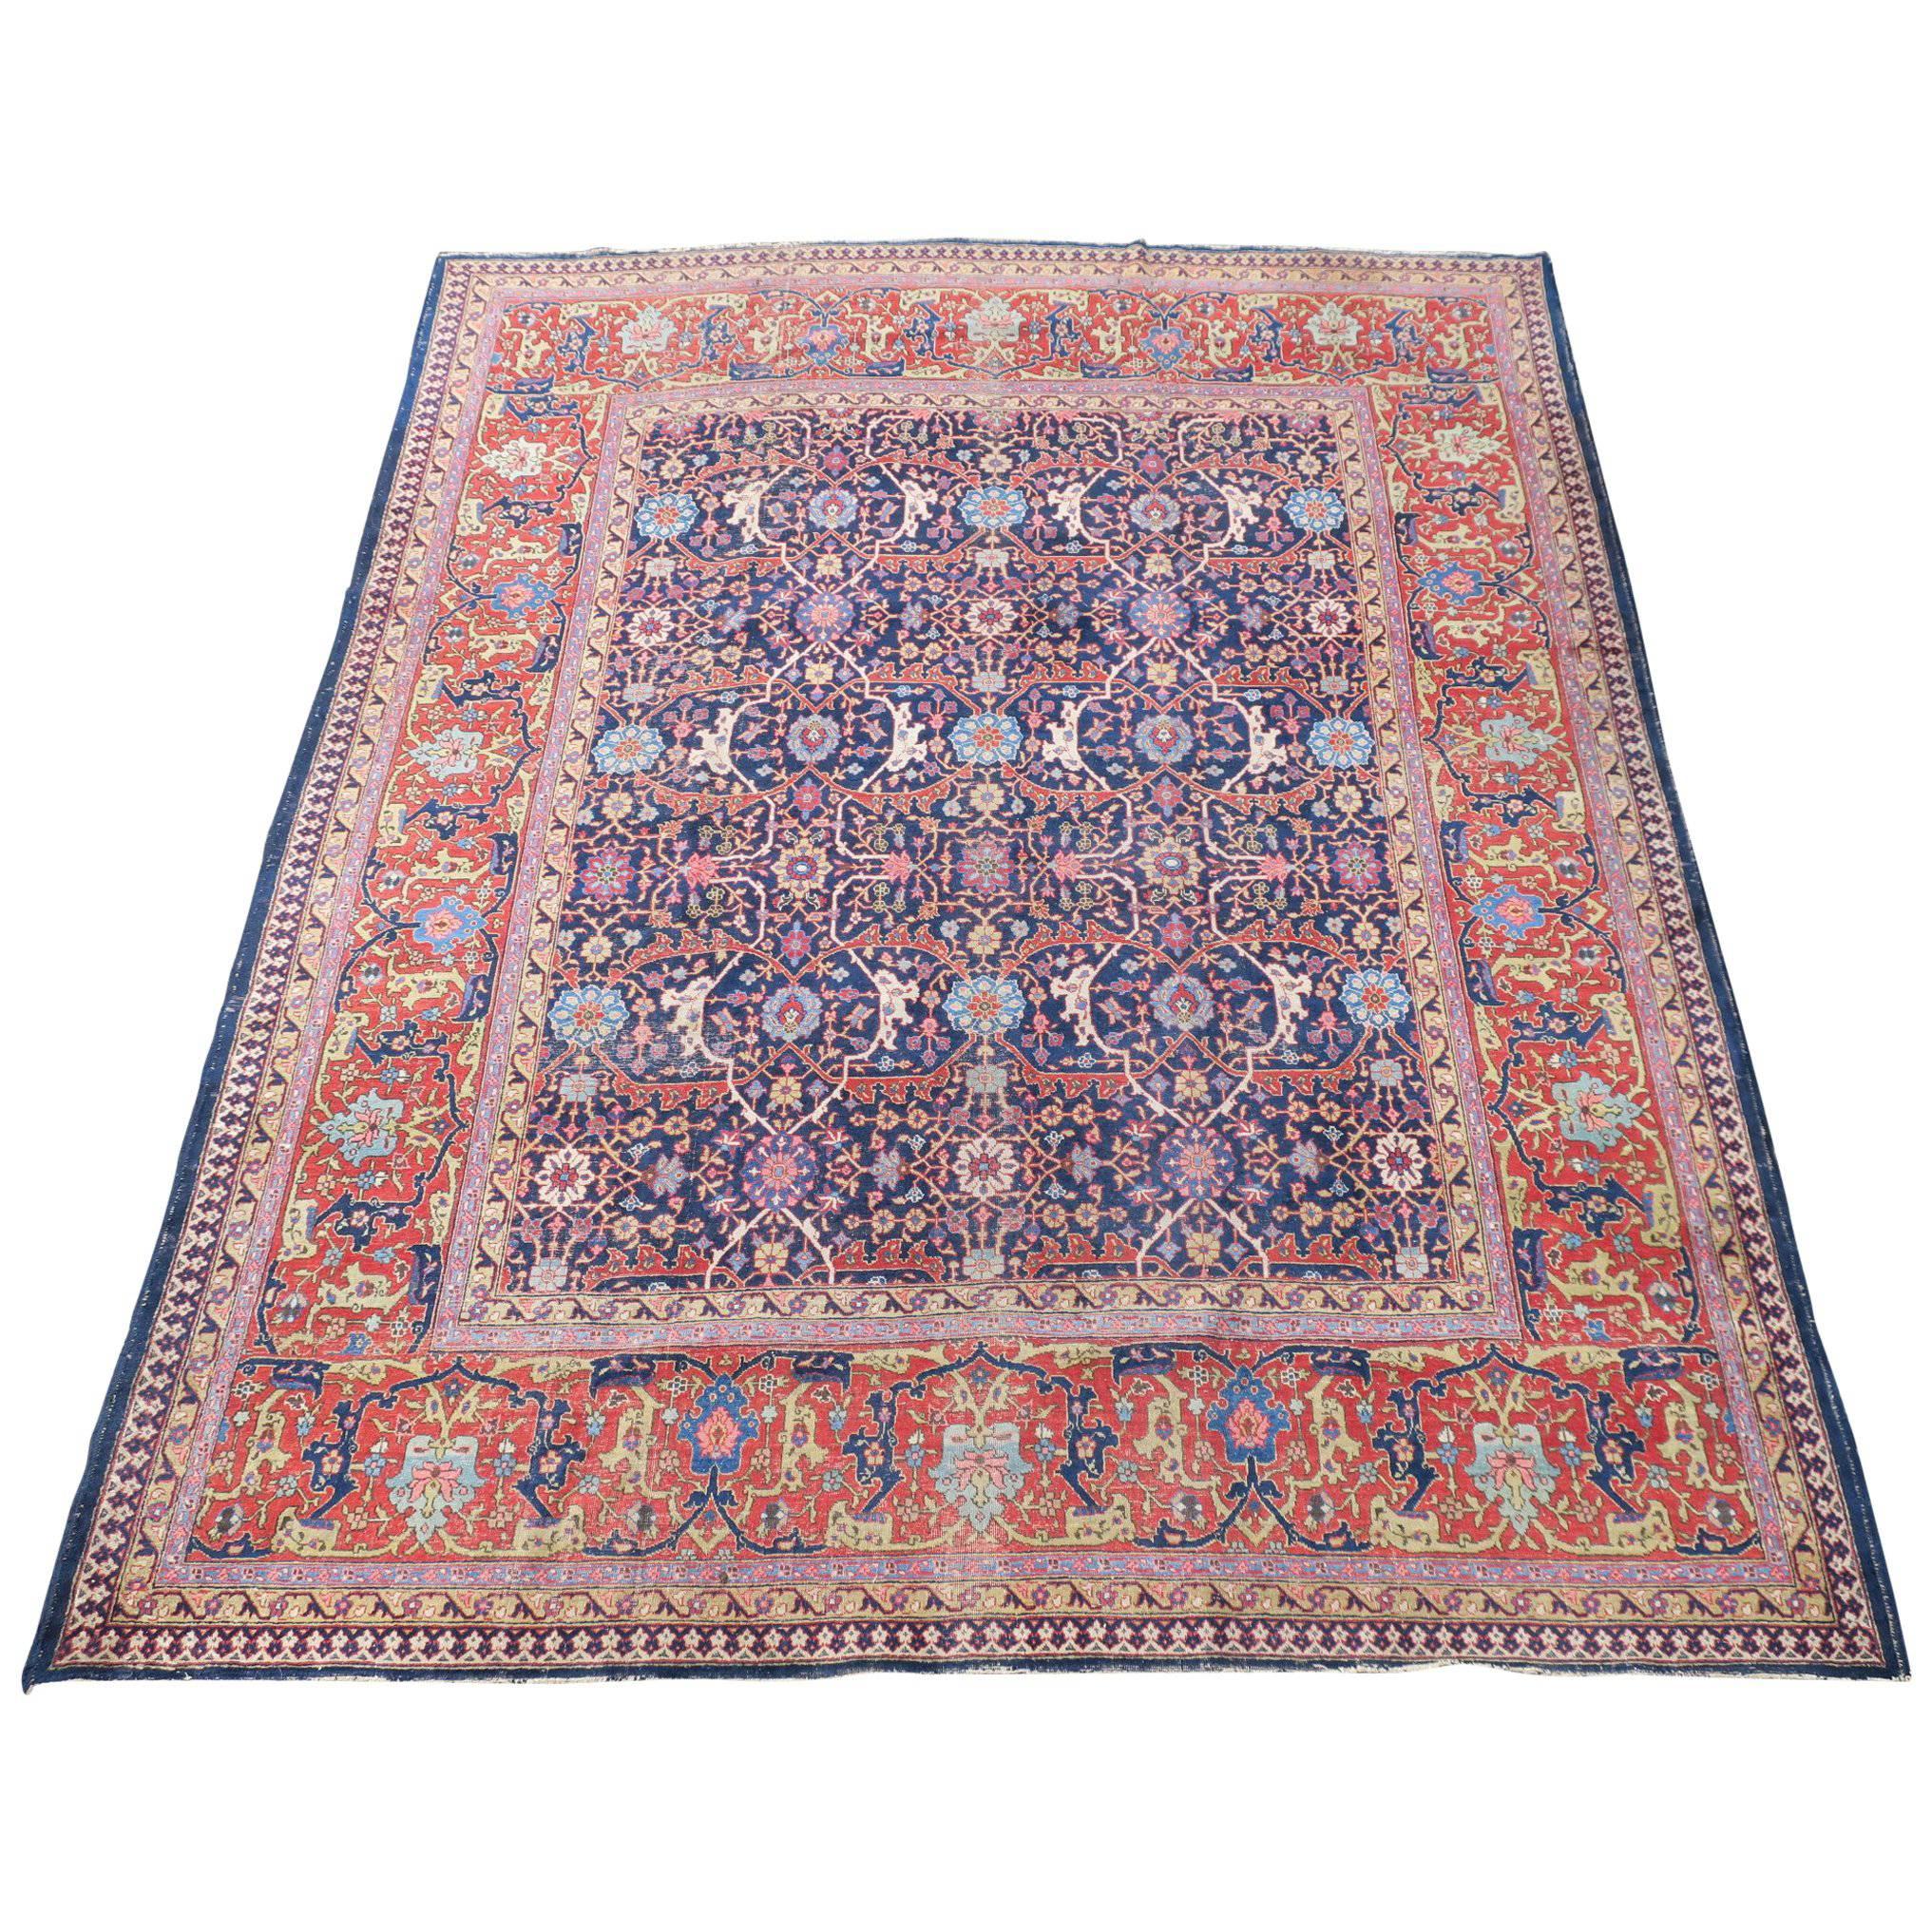 Antique Tabriz Carpet, Wide Border